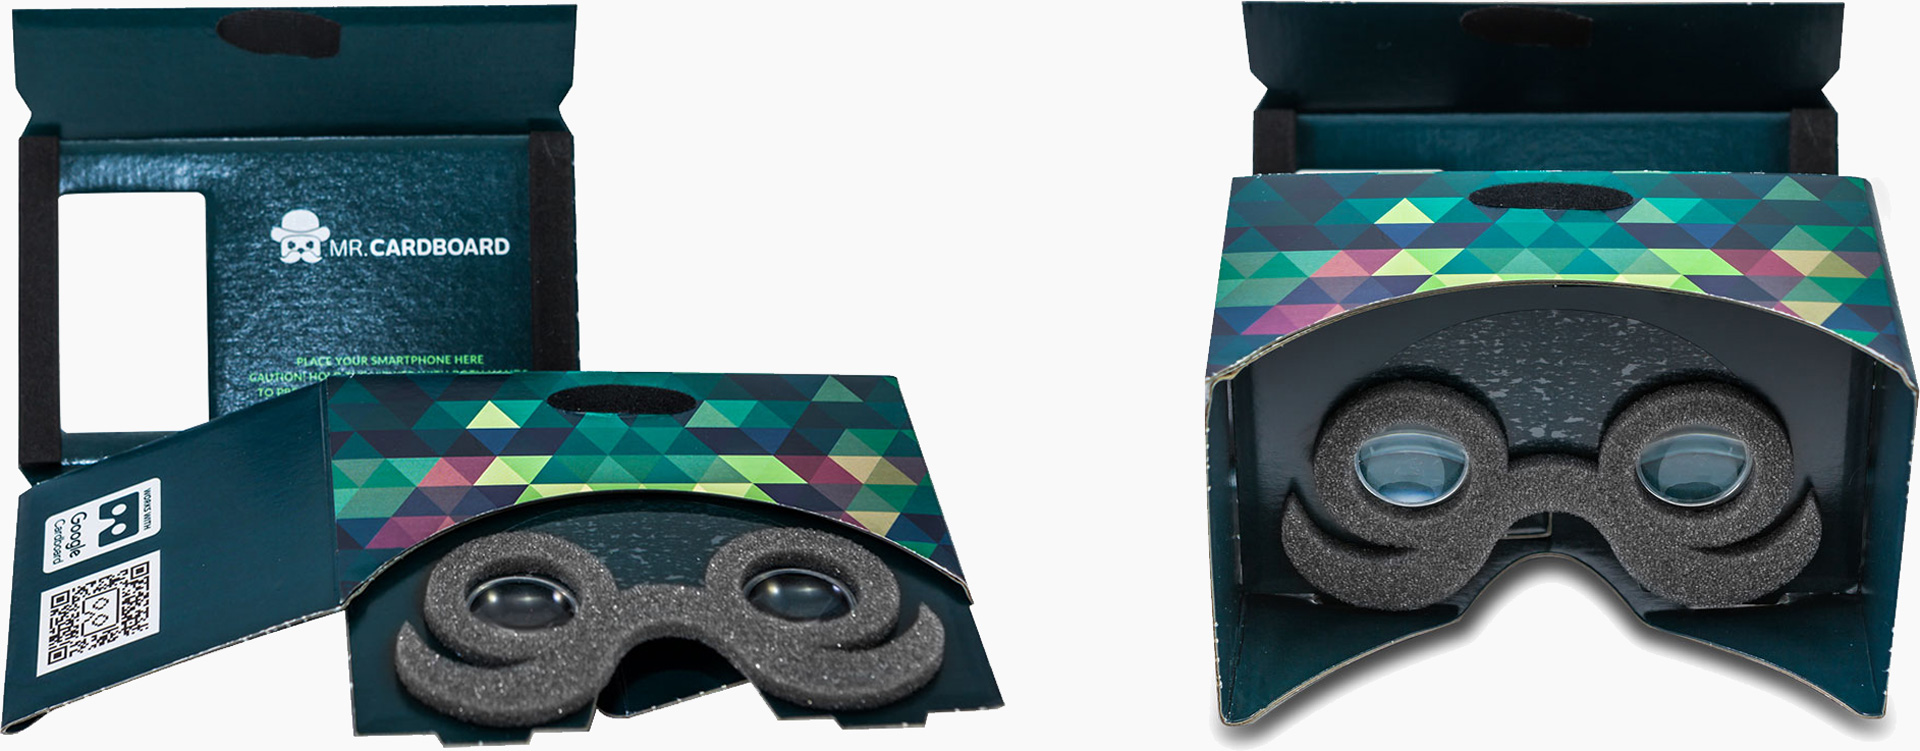 Branded Cardboard Customized VR Headsets - MR.CARDBOARD